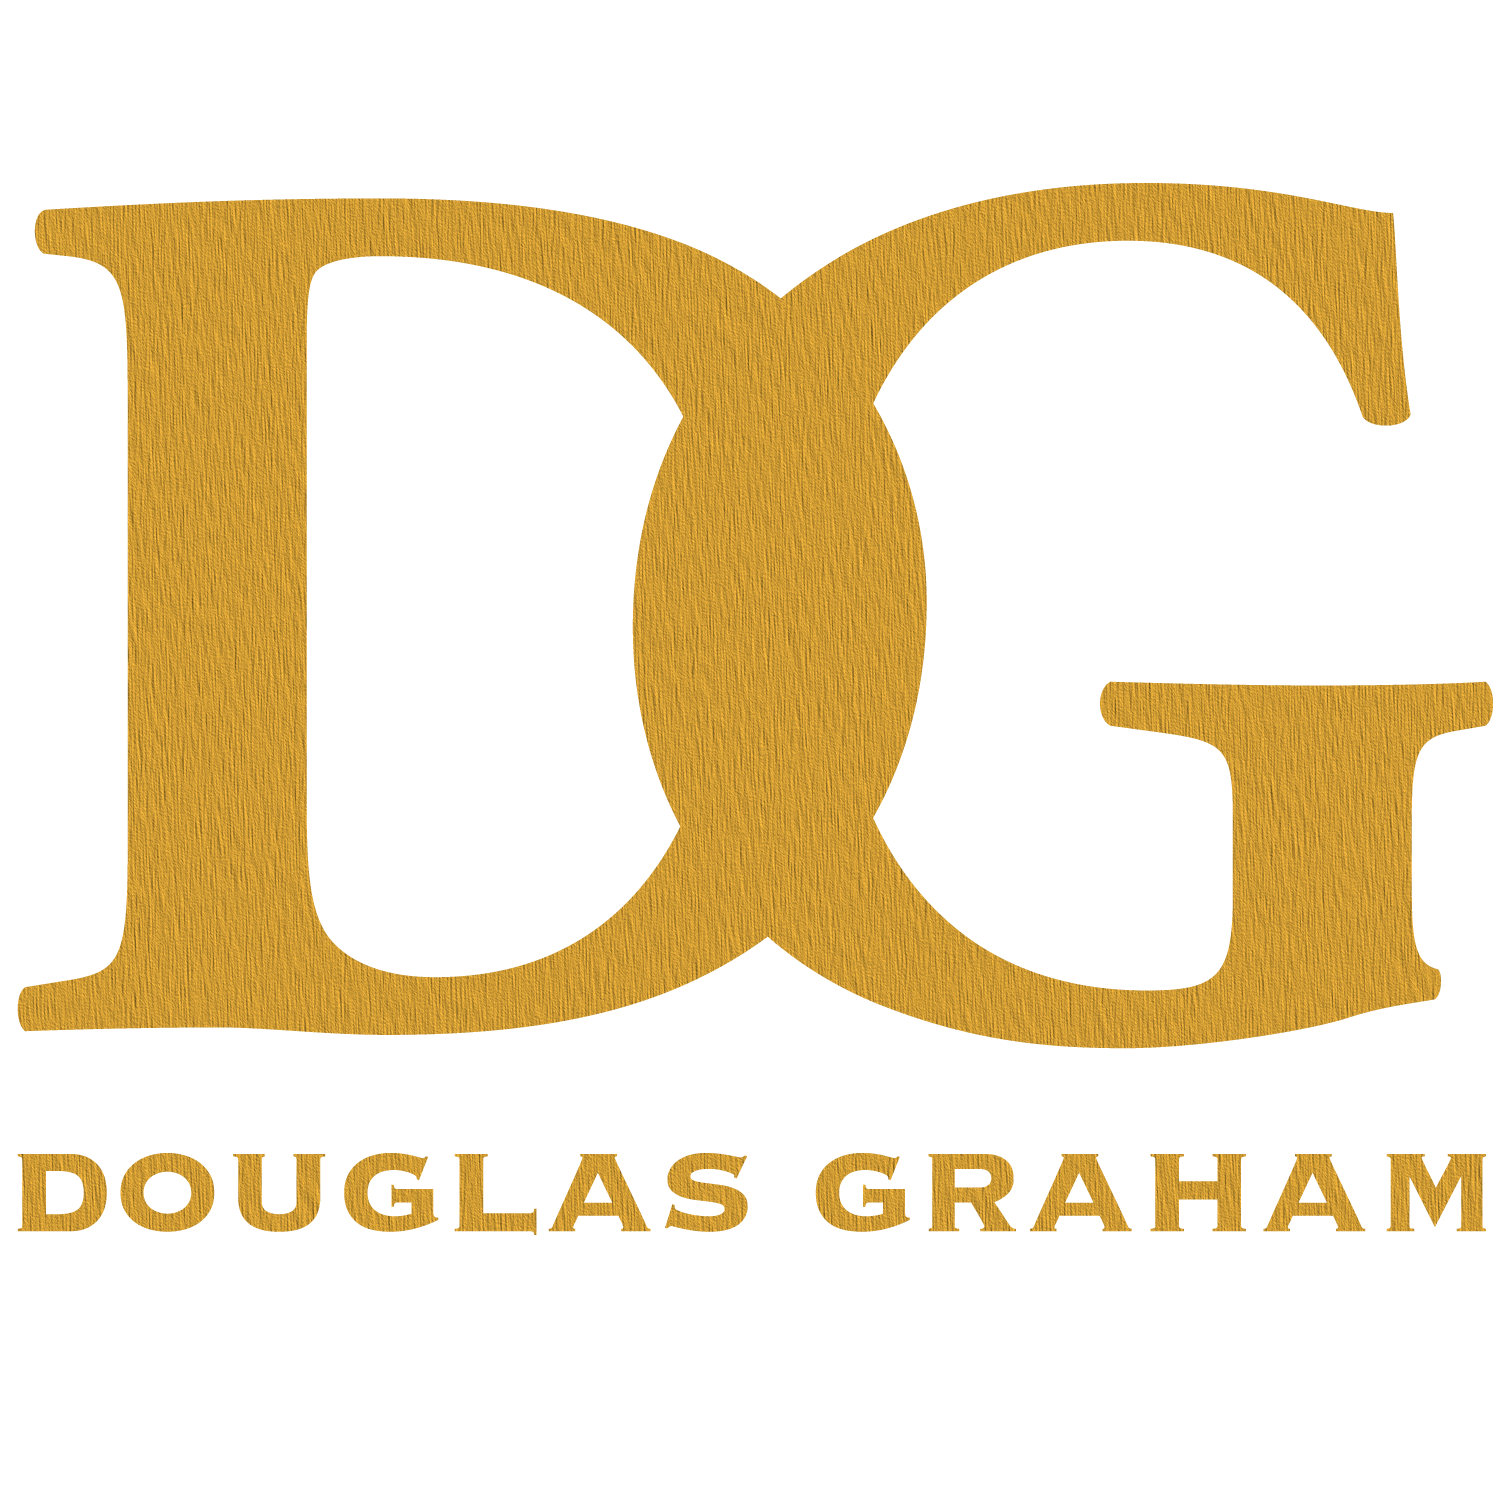 DOUGLAS GRAHAM